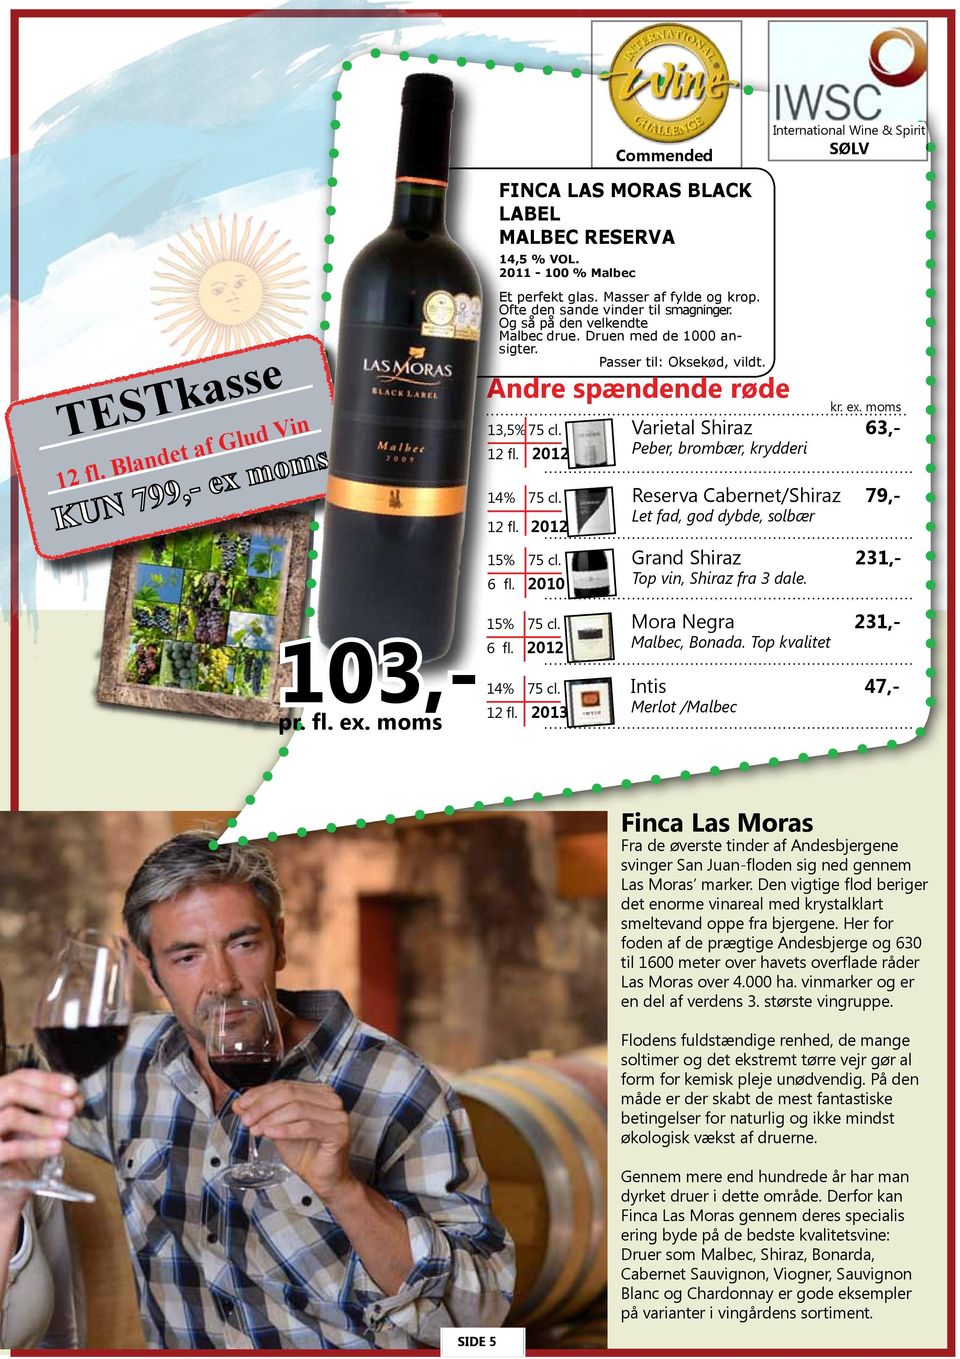 2010 Commended International Wine & Spirit SØLV Varietal Shiraz 63,- Peber, brombær, krydderi Reserva Cabernet/Shiraz 79,- Let fad, god dybde, solbær Grand Shiraz 231,- Top vin, Shiraz fra 3 dale.